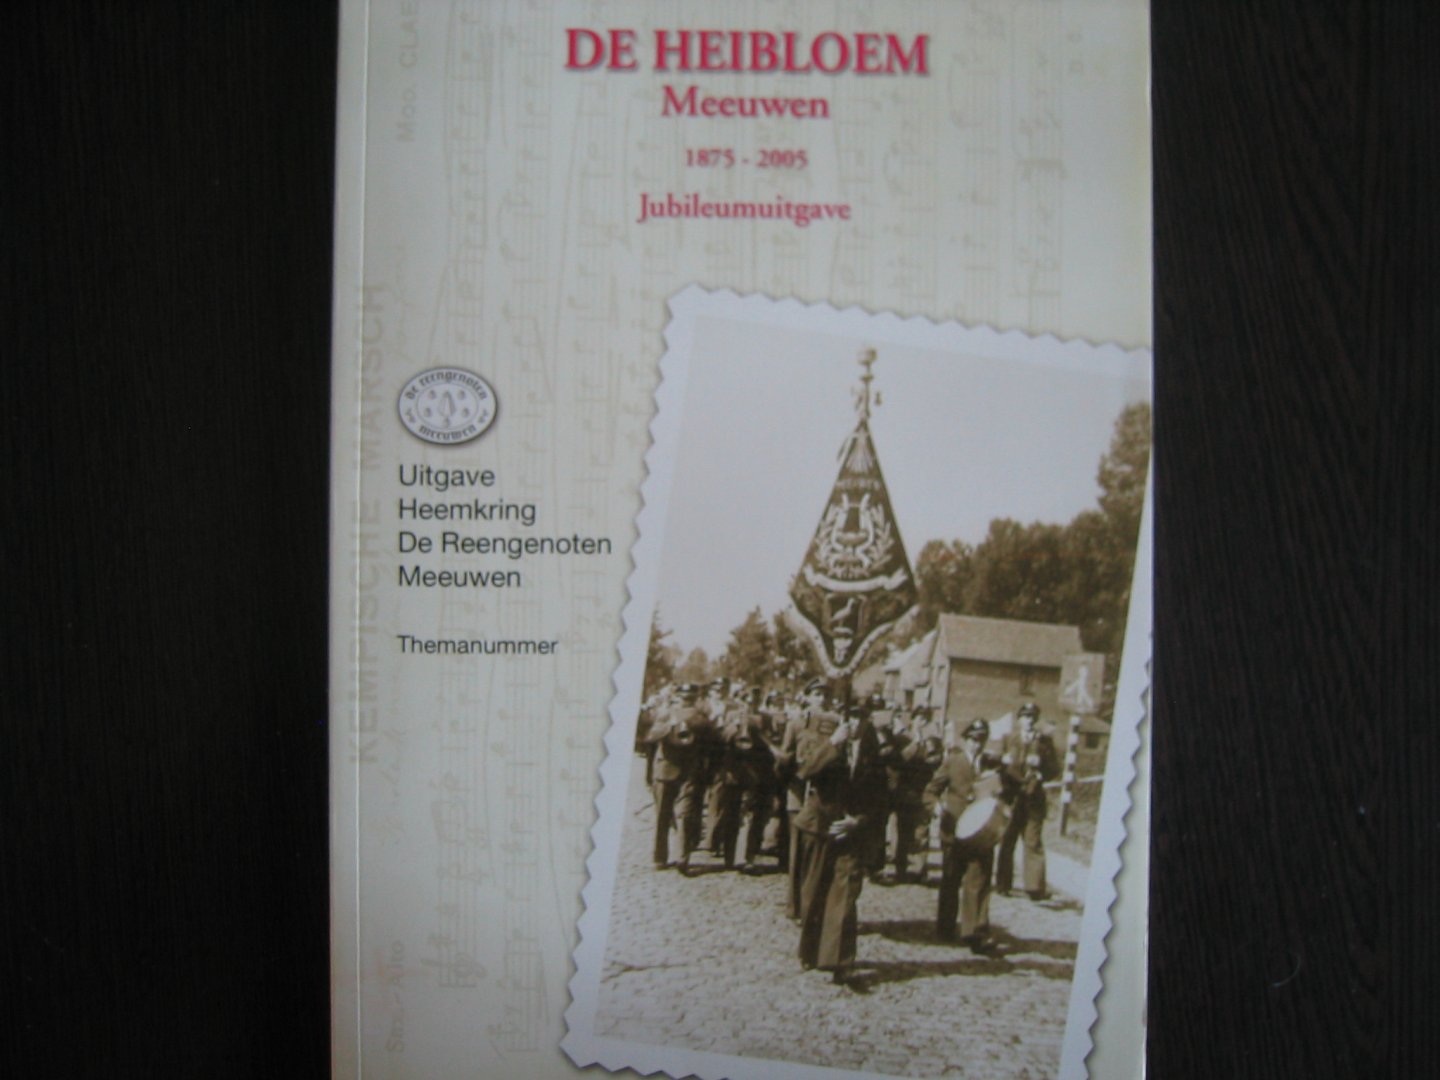 Bosmans, Jean en Raymond Housen. - De Heibloem Meeuwen 1875-2005 Jubileumuitgave